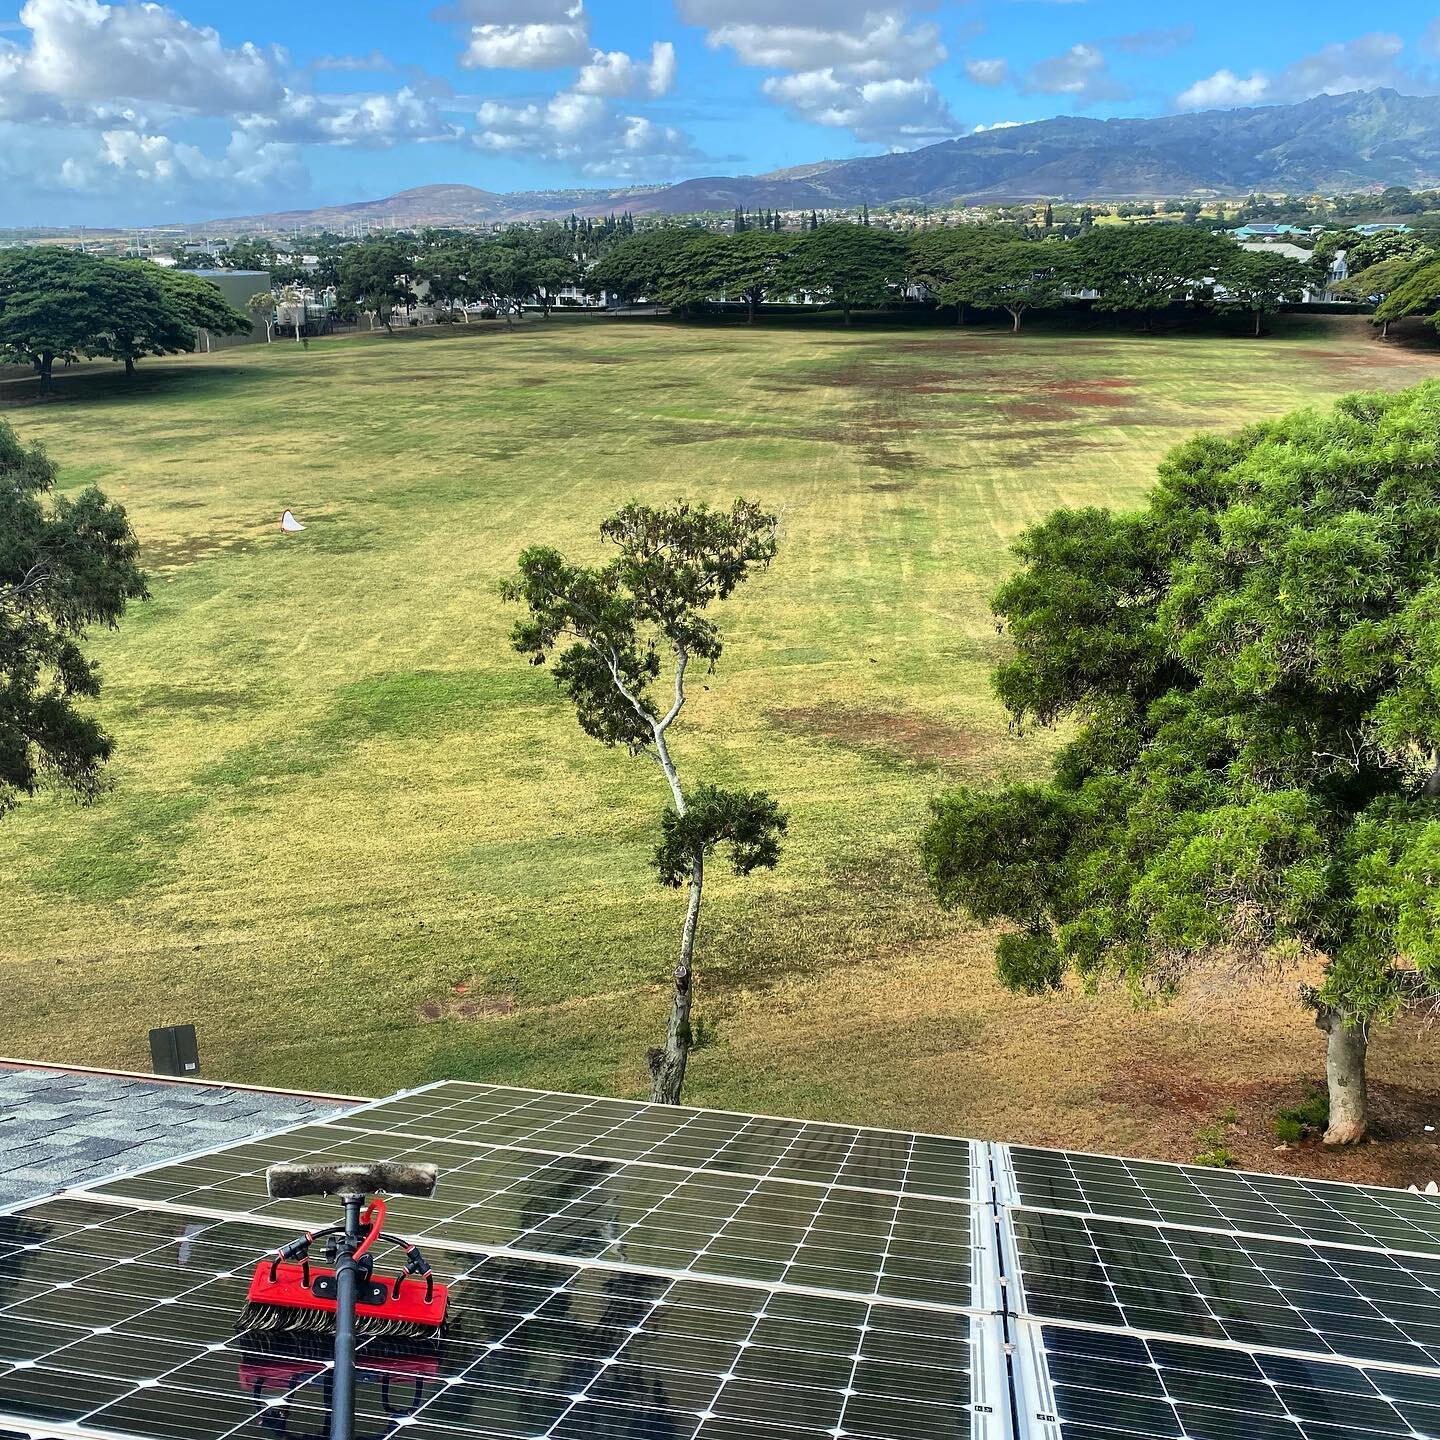 Check out that view! #workperks 🤙
.
.
.
#pacificspraywash #pressurewashing #powerwashing #roofcleaning #housewashing #solarpanelcleaning #solarpanels #renewableenergy #oahu #honolulu #waikele #kailua #kaneohe #waimanalo #koolau #luckywelivehawaii #b